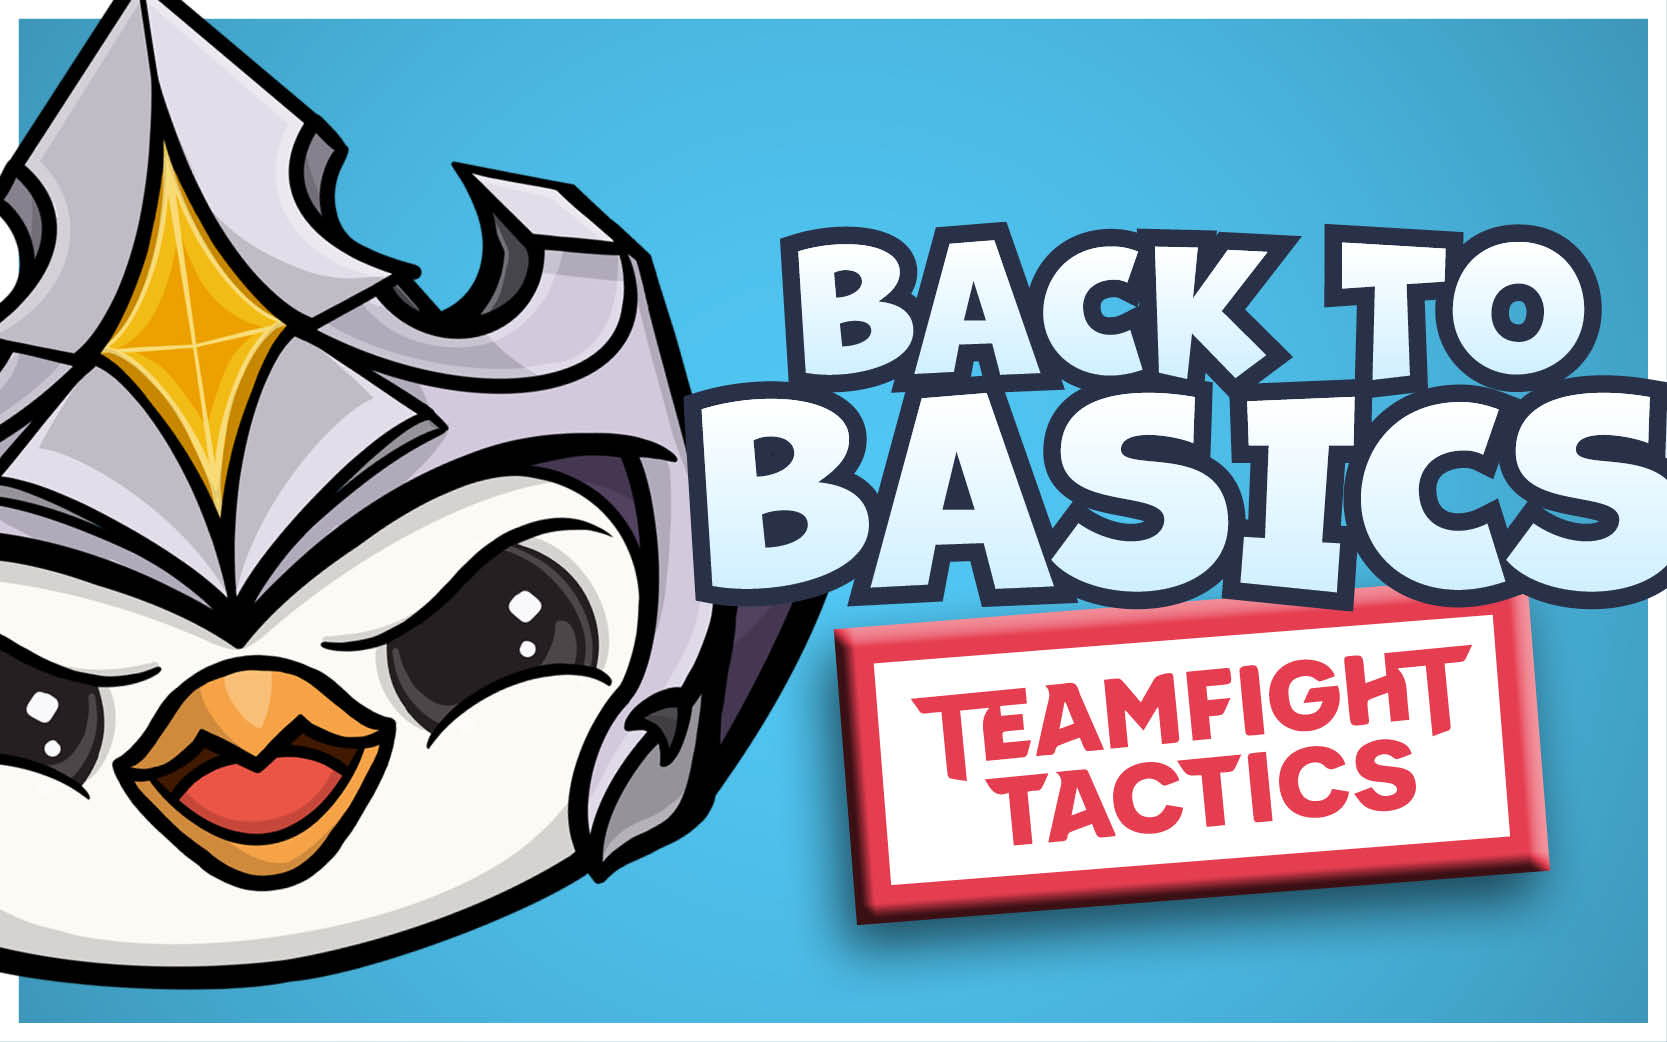 Back to Basics: Teamfight Tactics